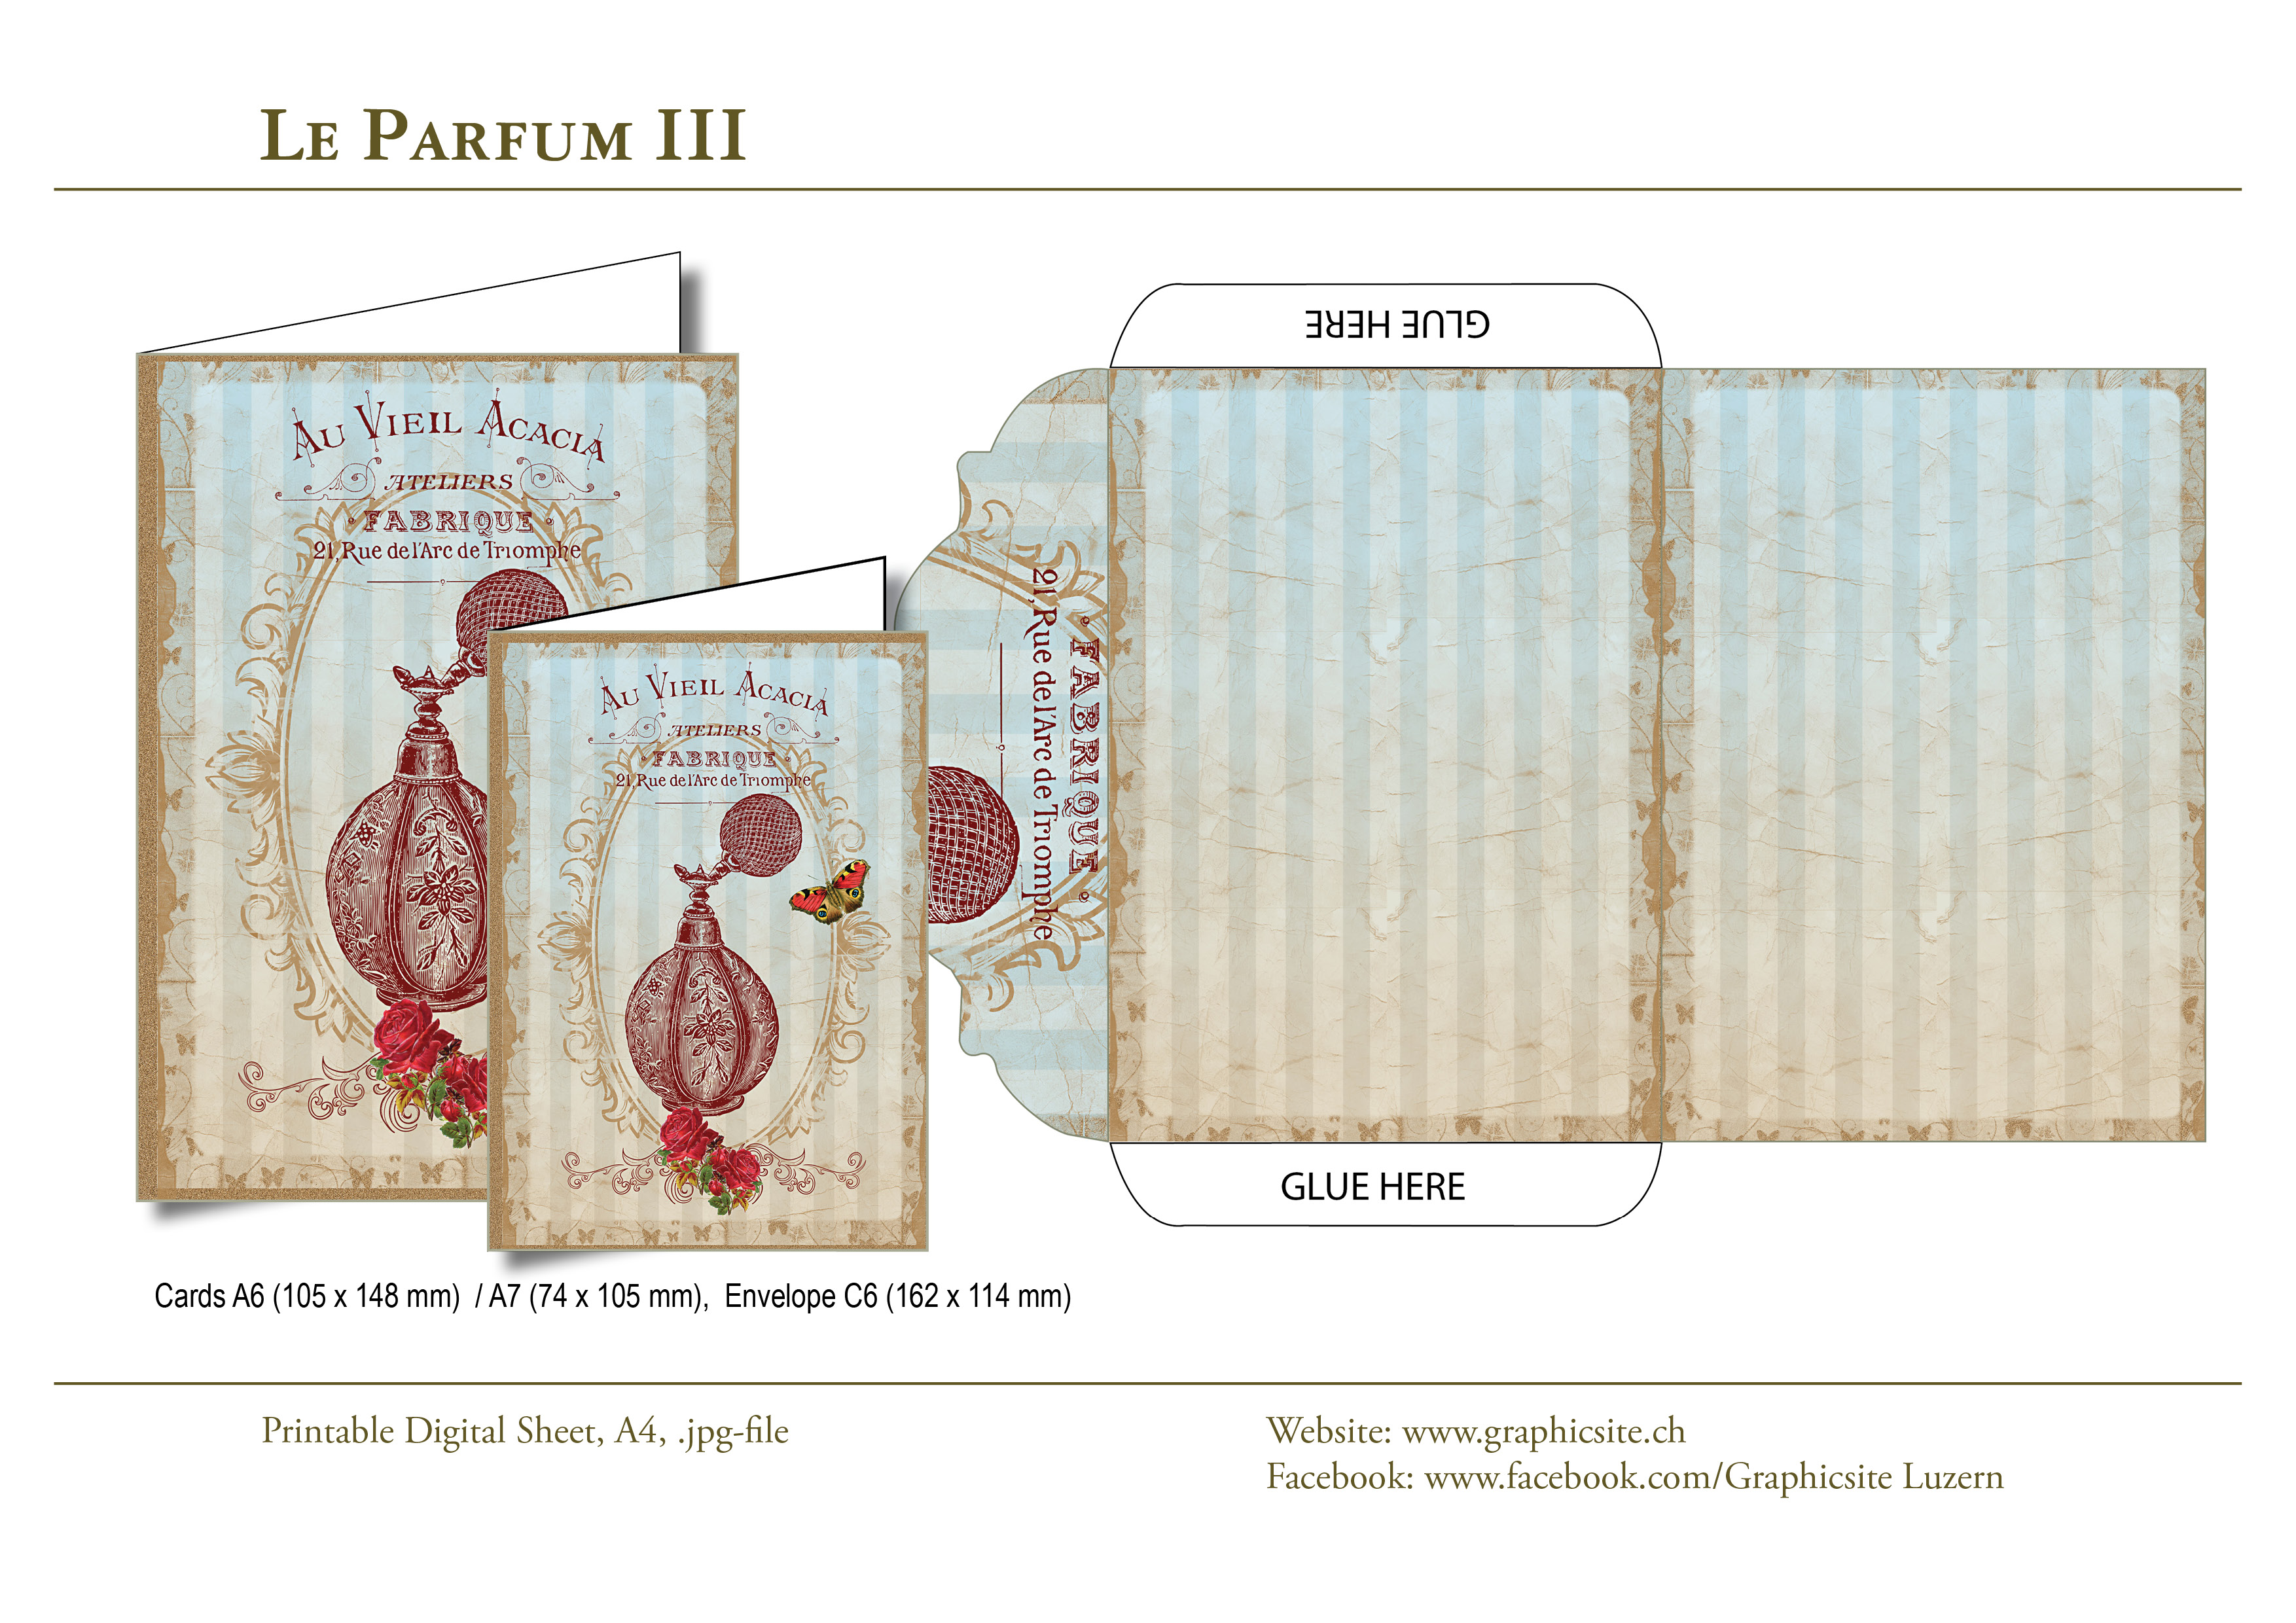 Printable Digital Sheet - DIN A-Formats - Le Parfum III